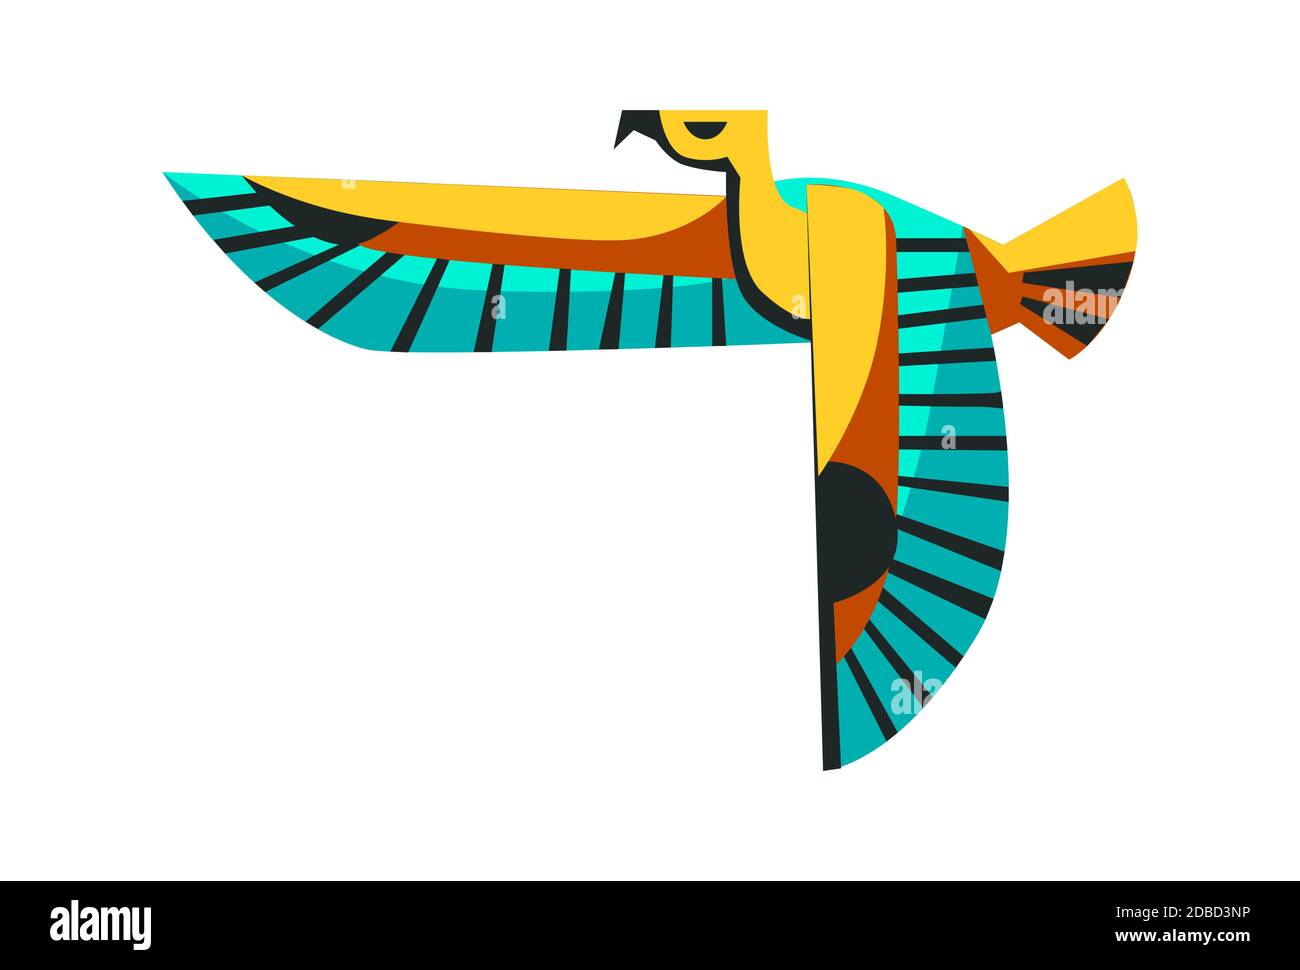 Heiliges Tier des alten Ägypten, fliegenden Falken, die Verkörperung der sonnengott Ra Horus, Cartoon-Vektor-Illustration Stock Vektor